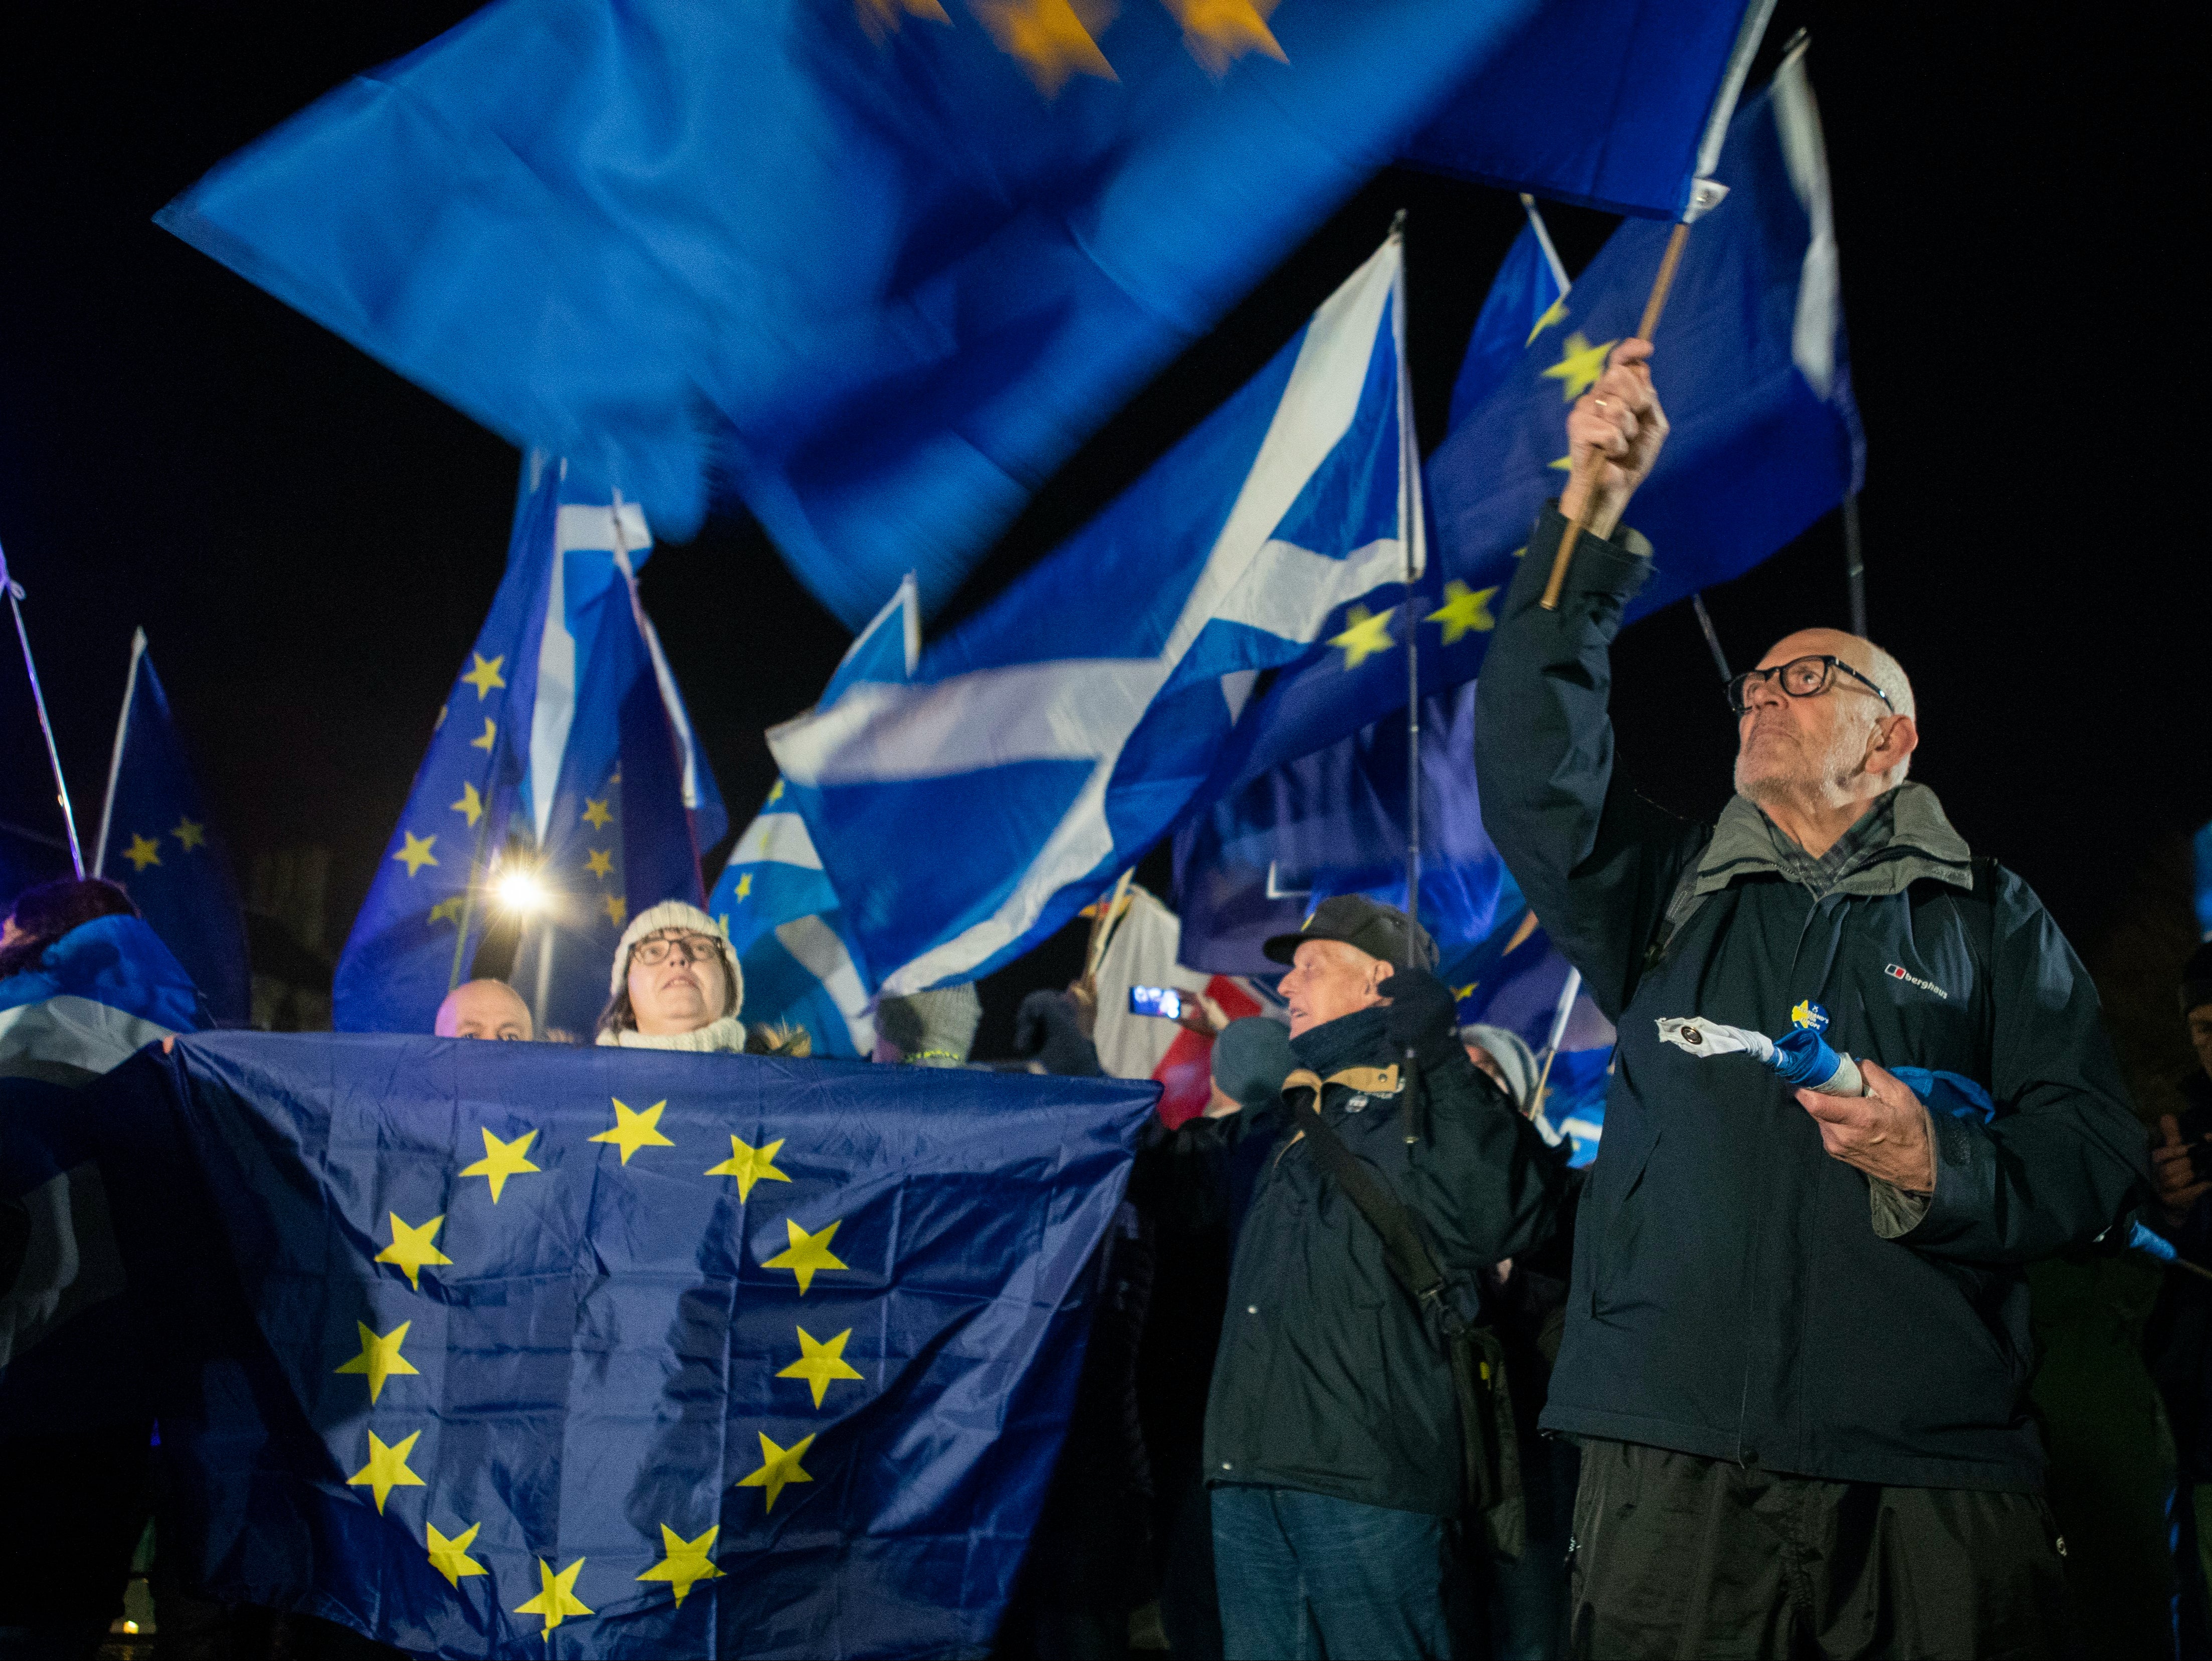 Pro-EU campaigners stage protest outside Scottish parliament